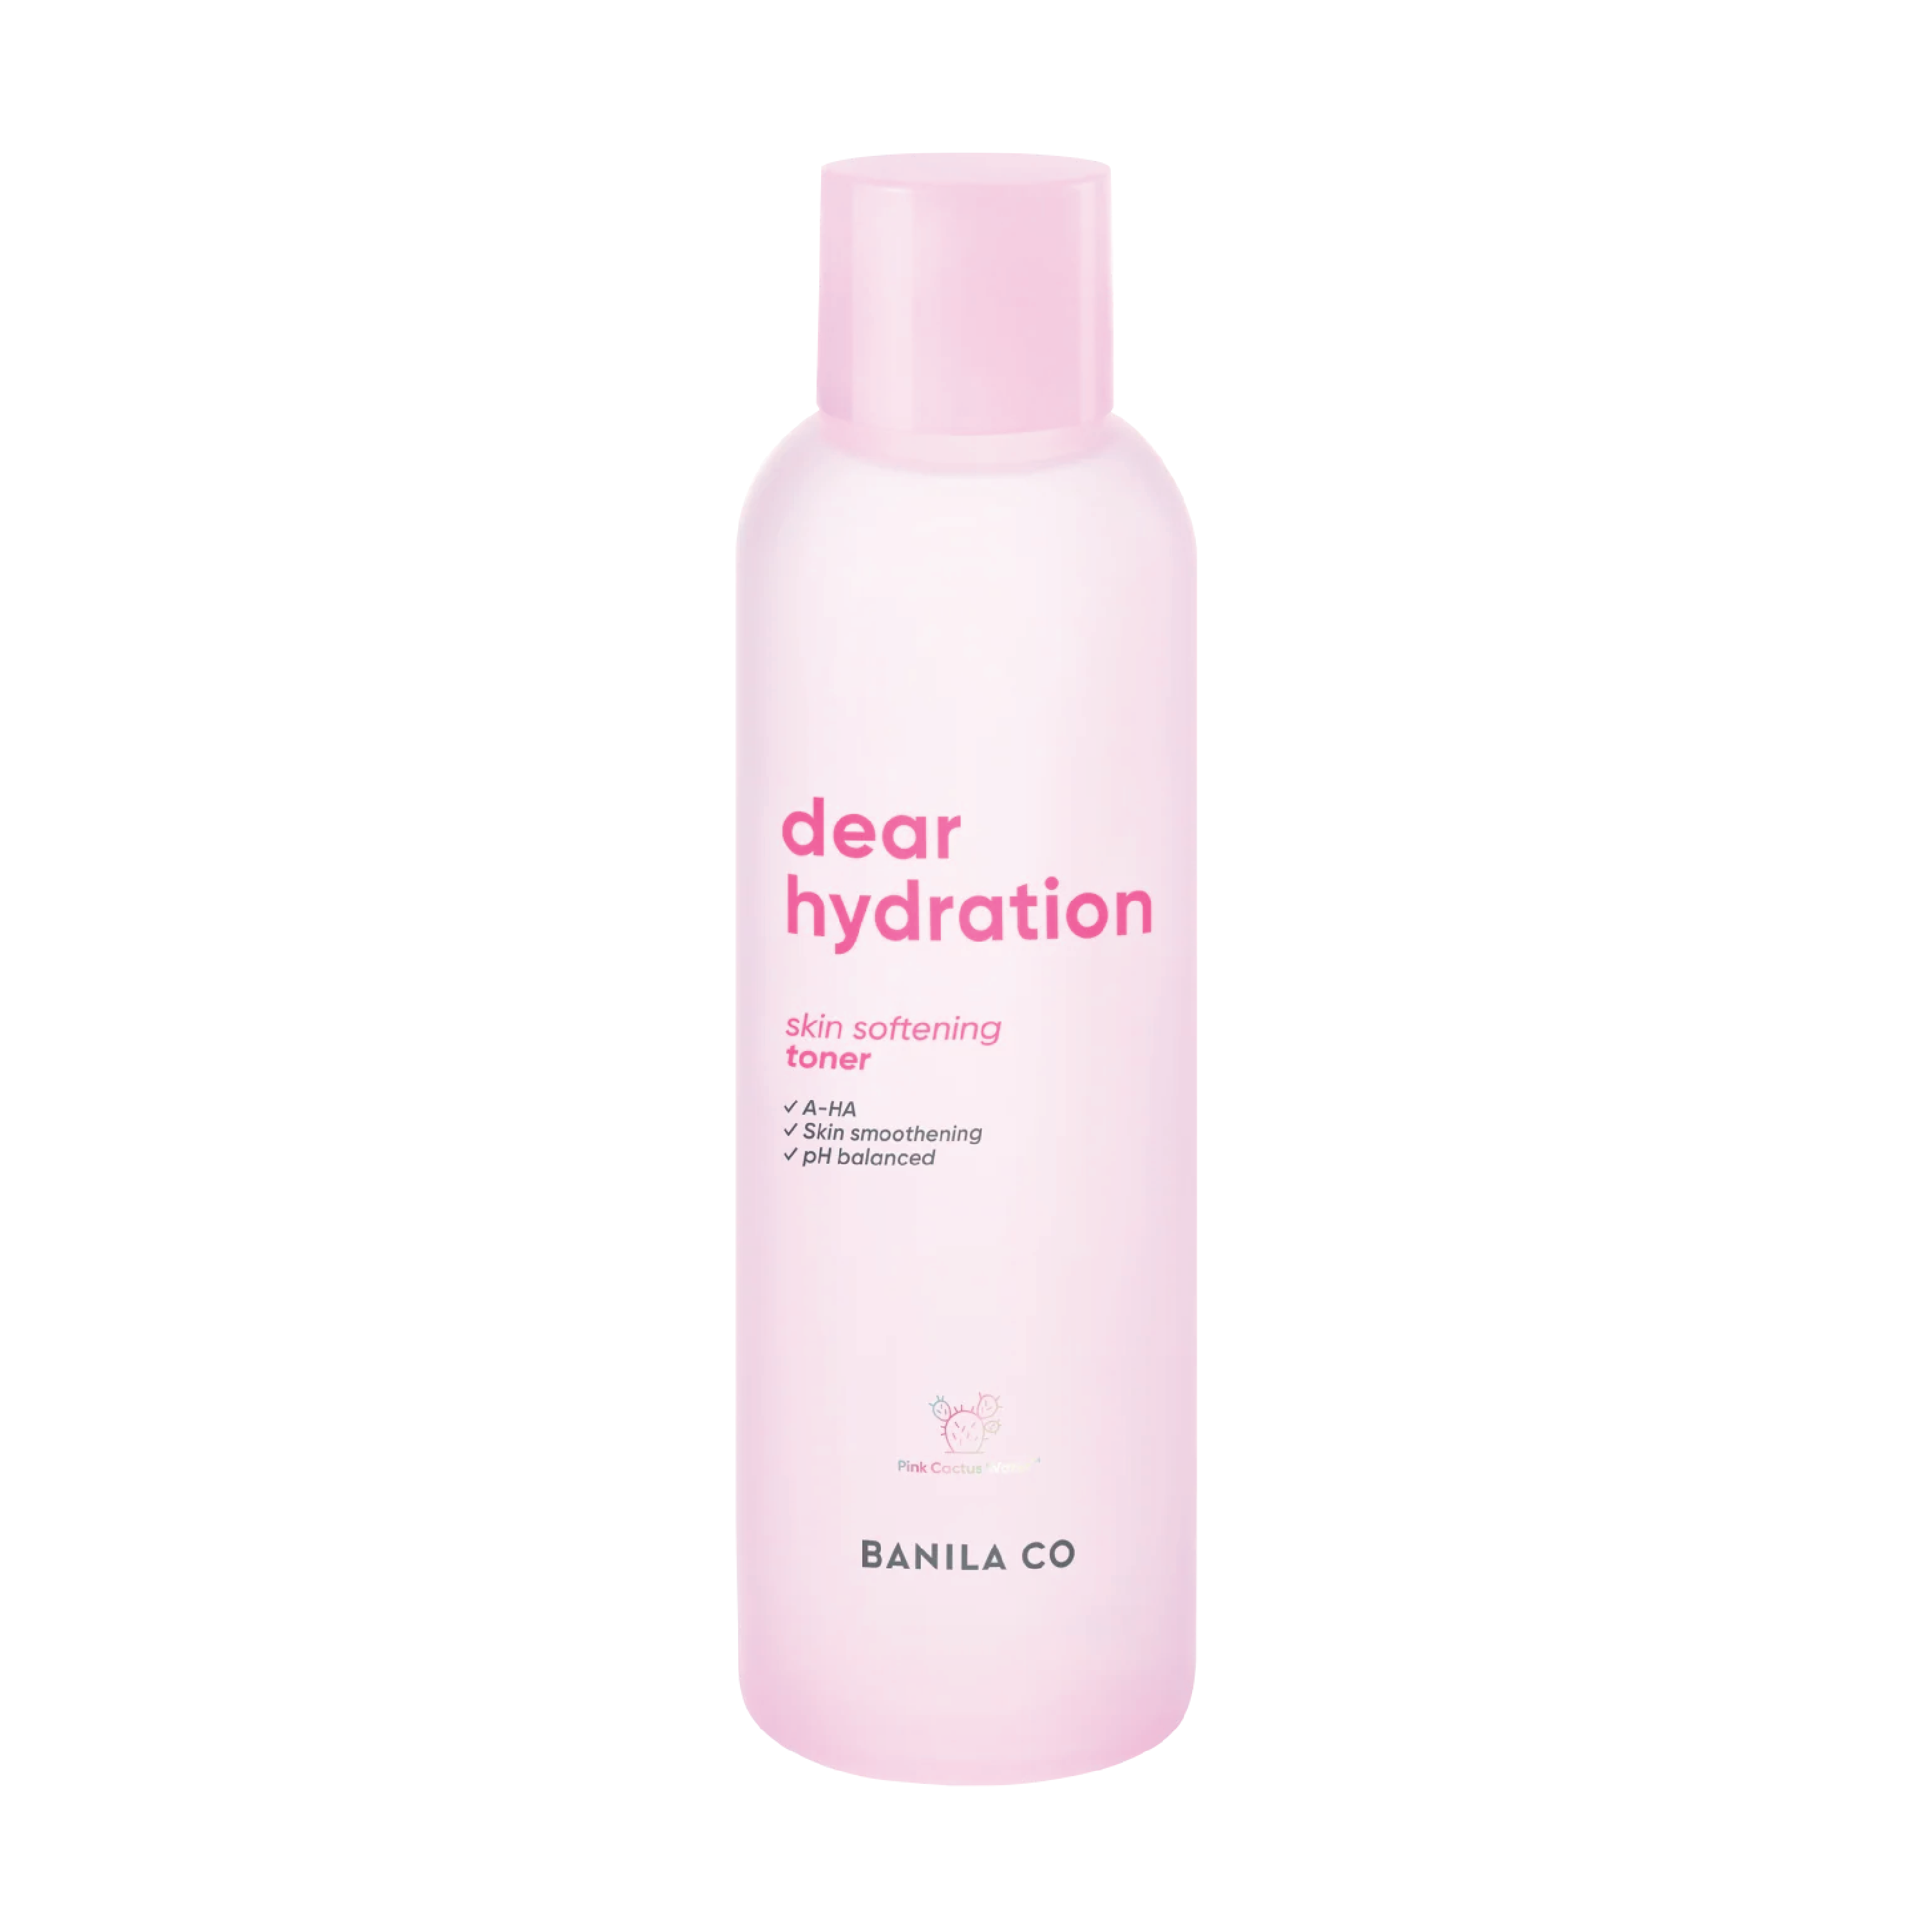 Banila Co Dear Hydration Skin Softening Toner, 200 ml